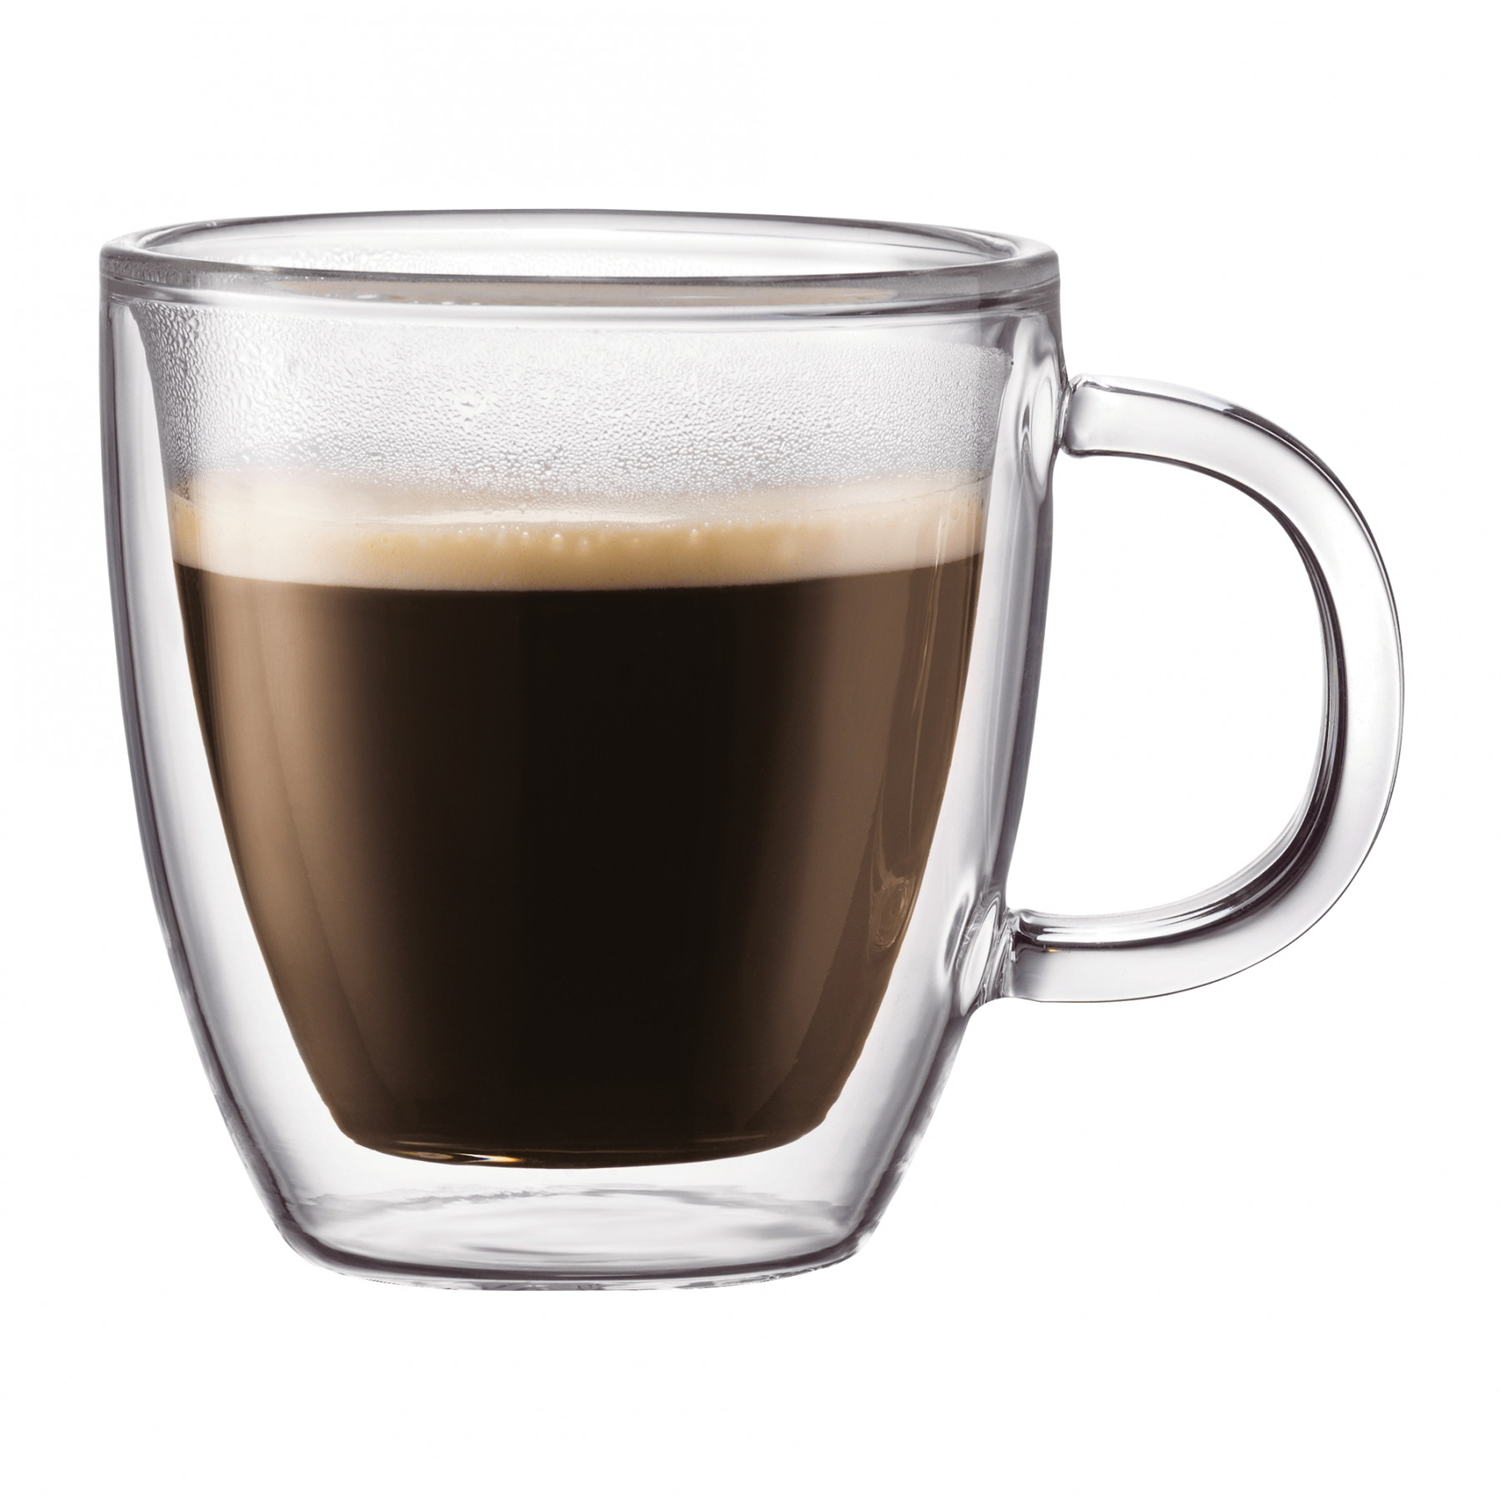 KYOCERA > best ceramic coated tumblers mugs thermos coffee tea